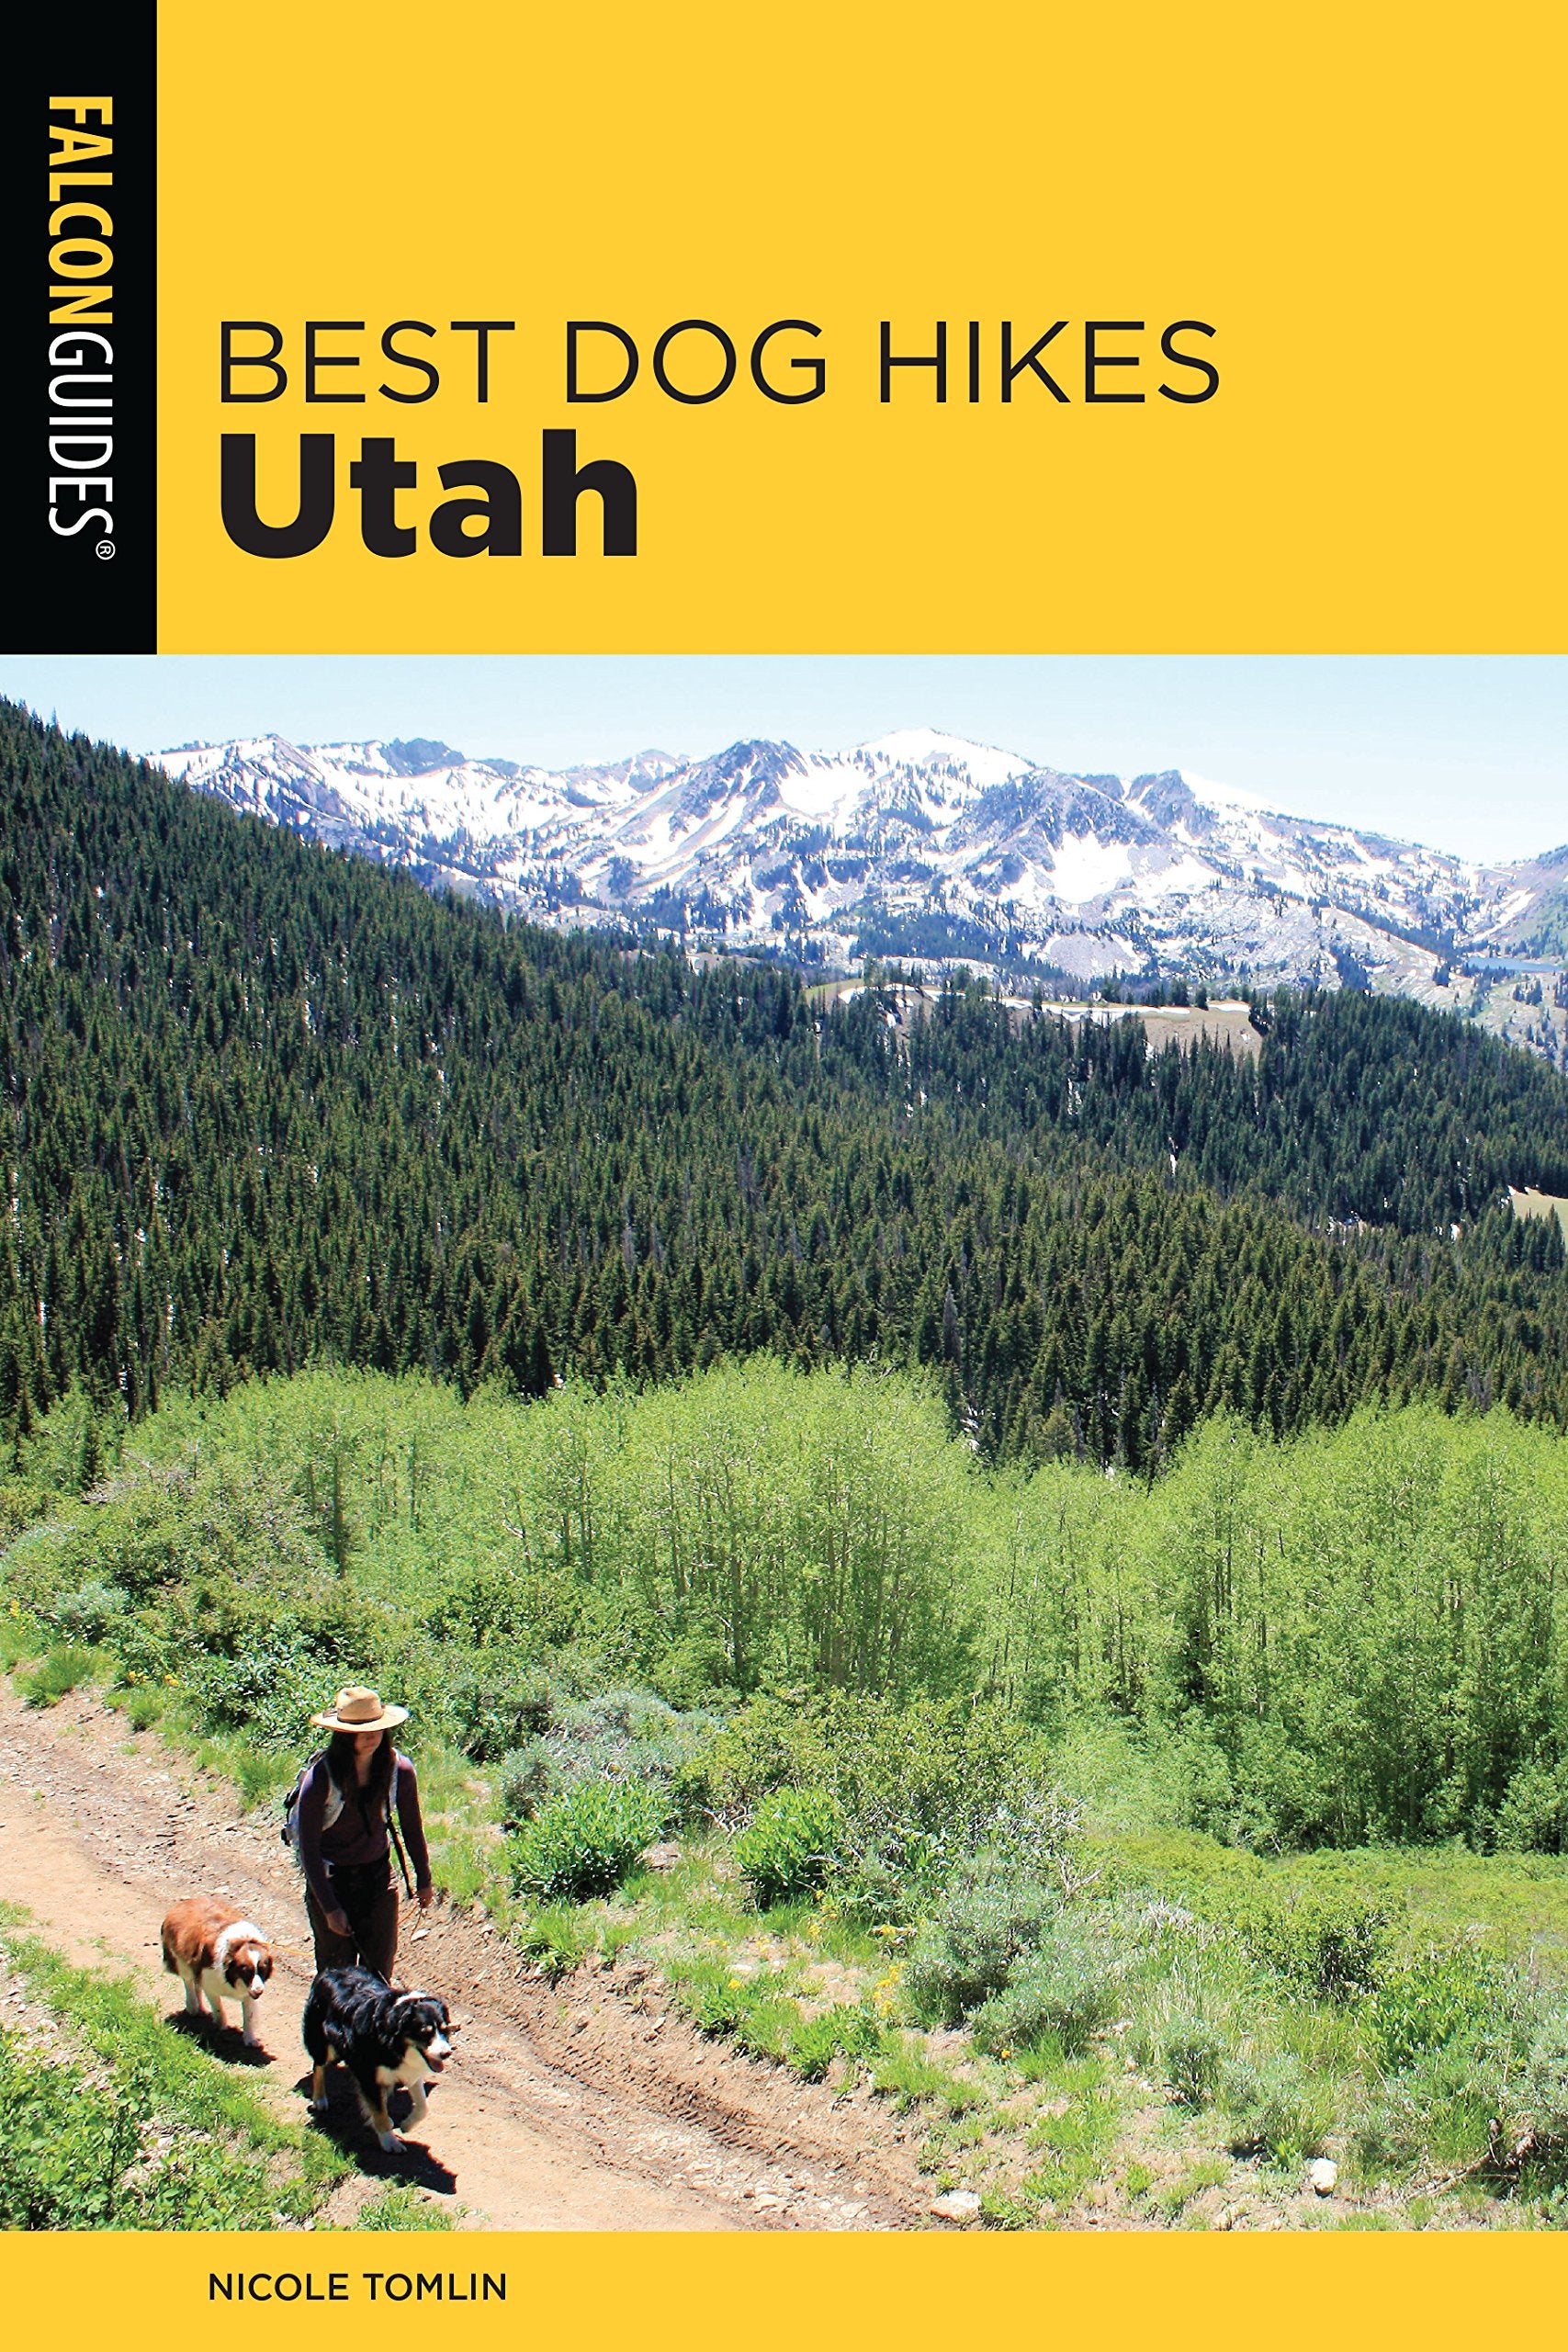 Best Dog Hikes - Utah | Utah.com Merchandise